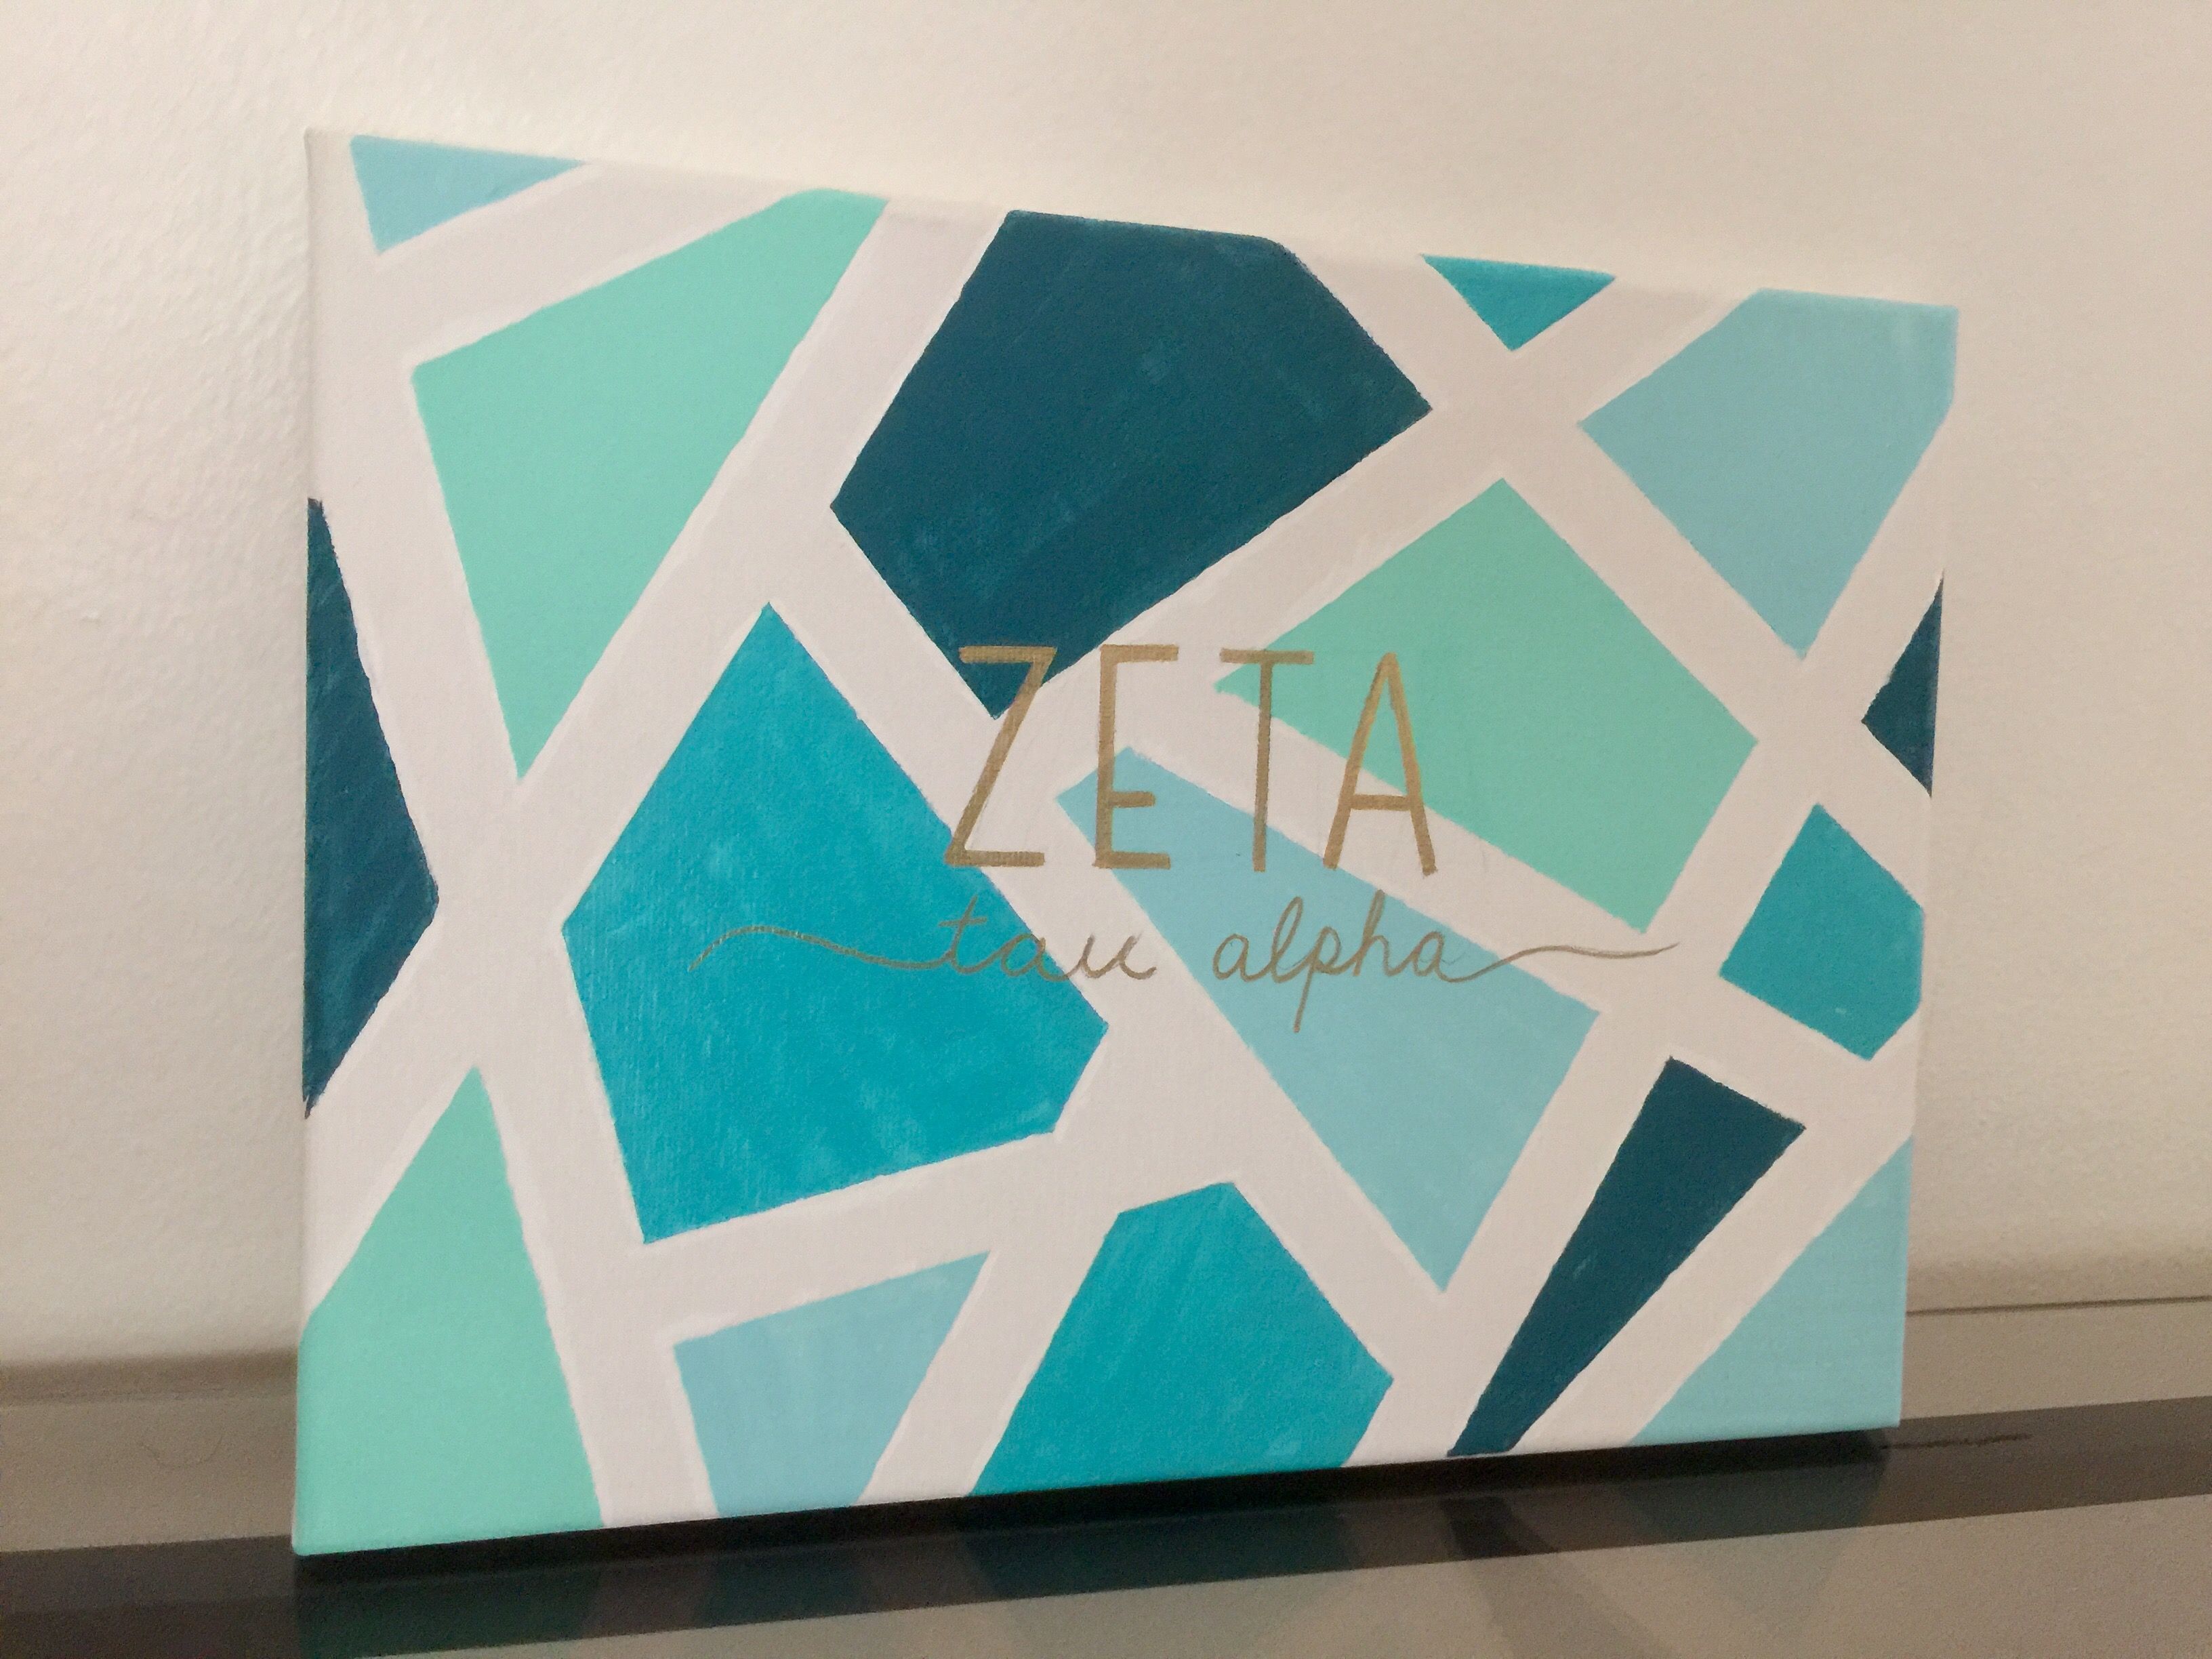 Zeta tau alpha painted canvas